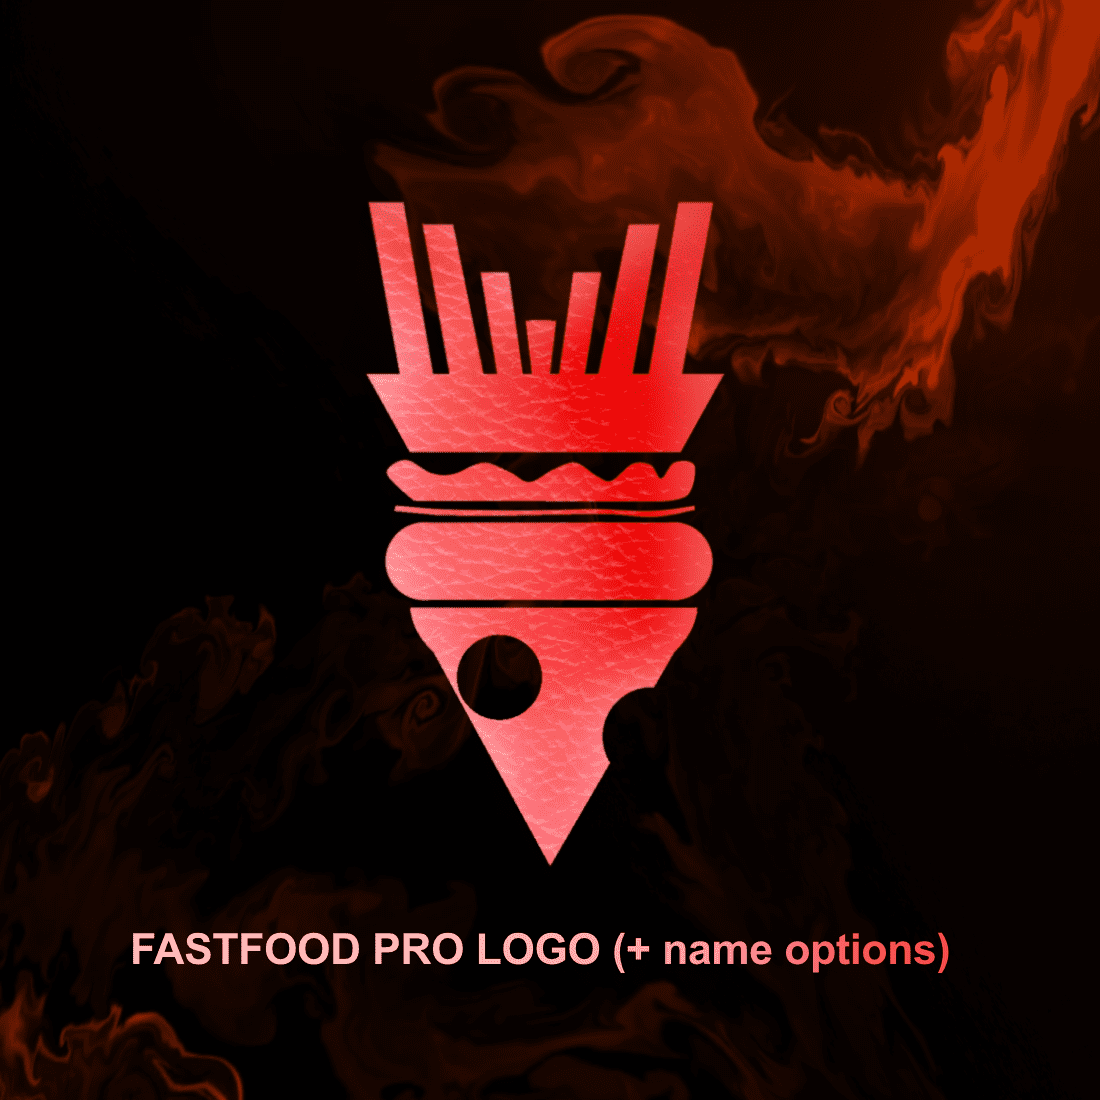 Burger pro logo preview image.